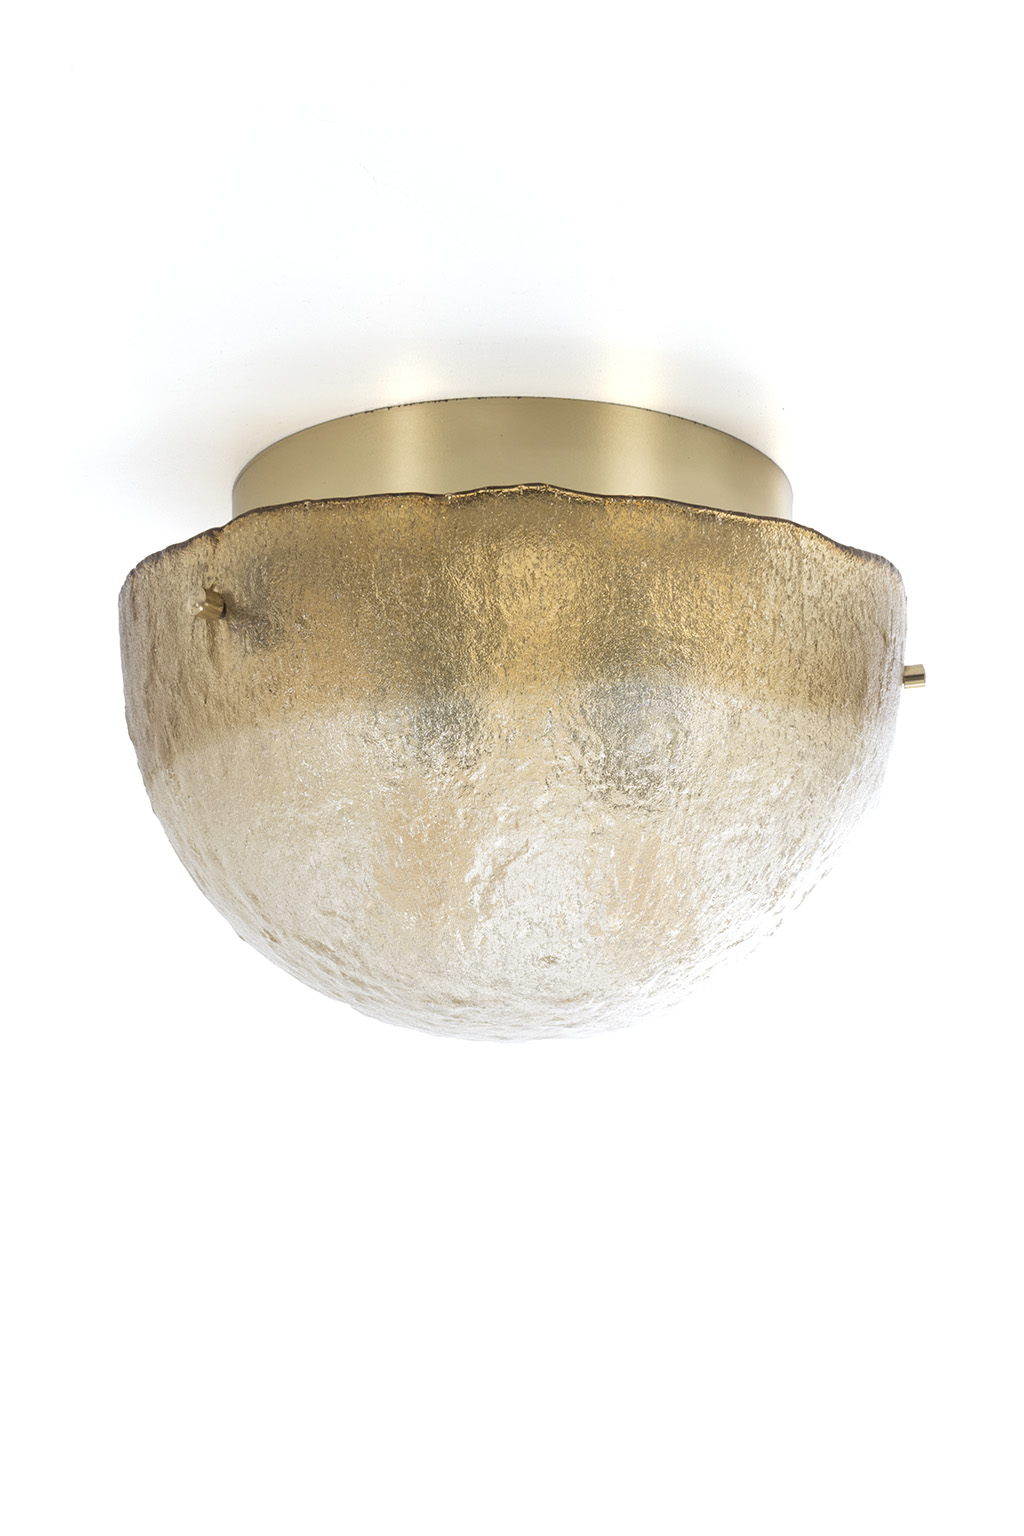 Hillebrand ceiling lamp